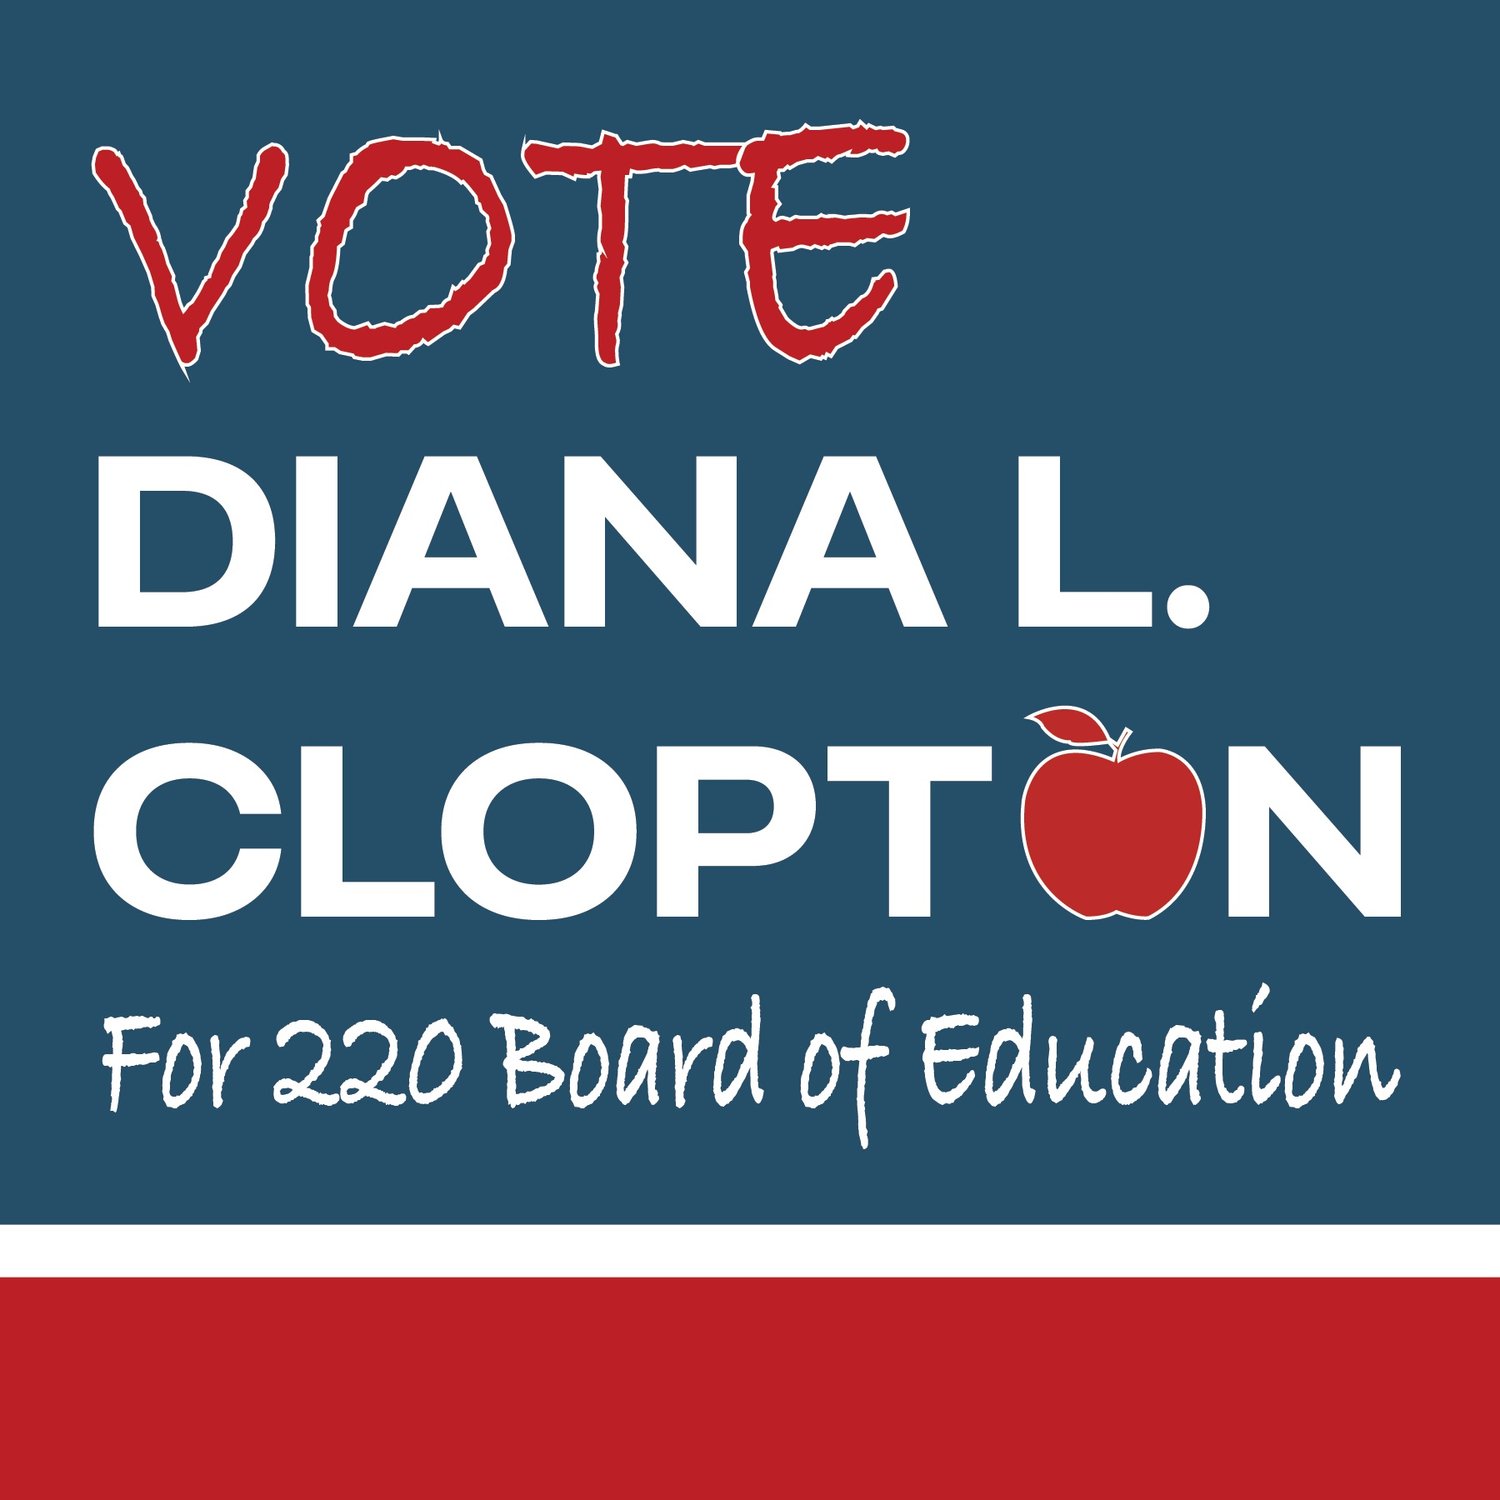 Diana L. Clopton for 220 